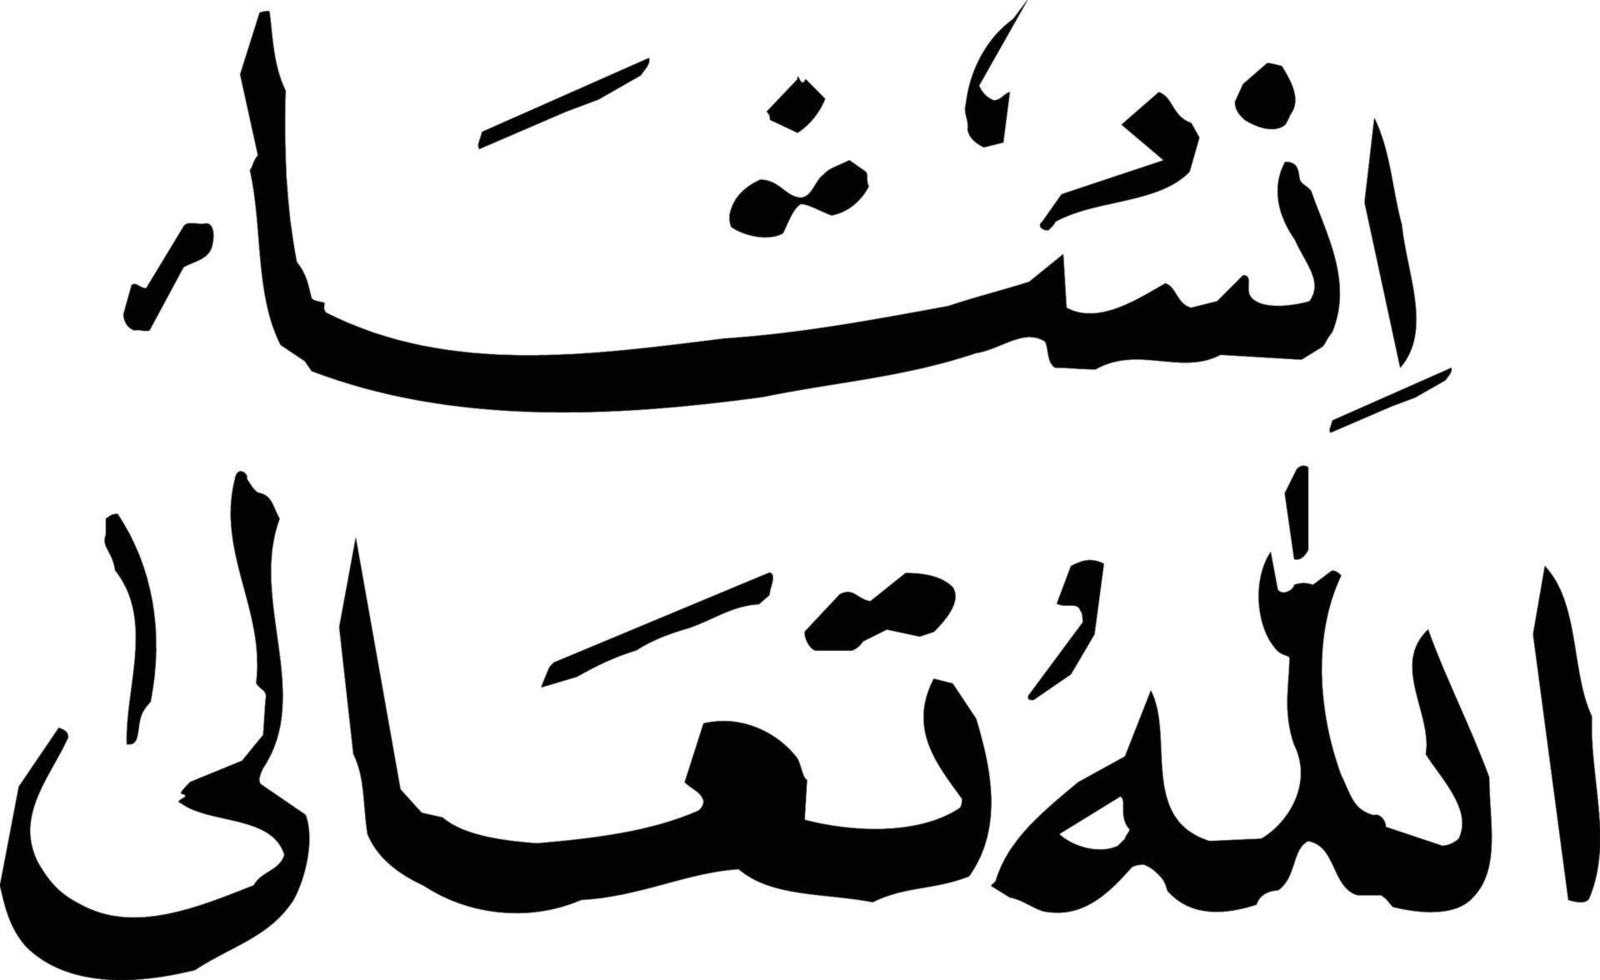 insha allaha calligraphie arabe islamique vecteur gratuit